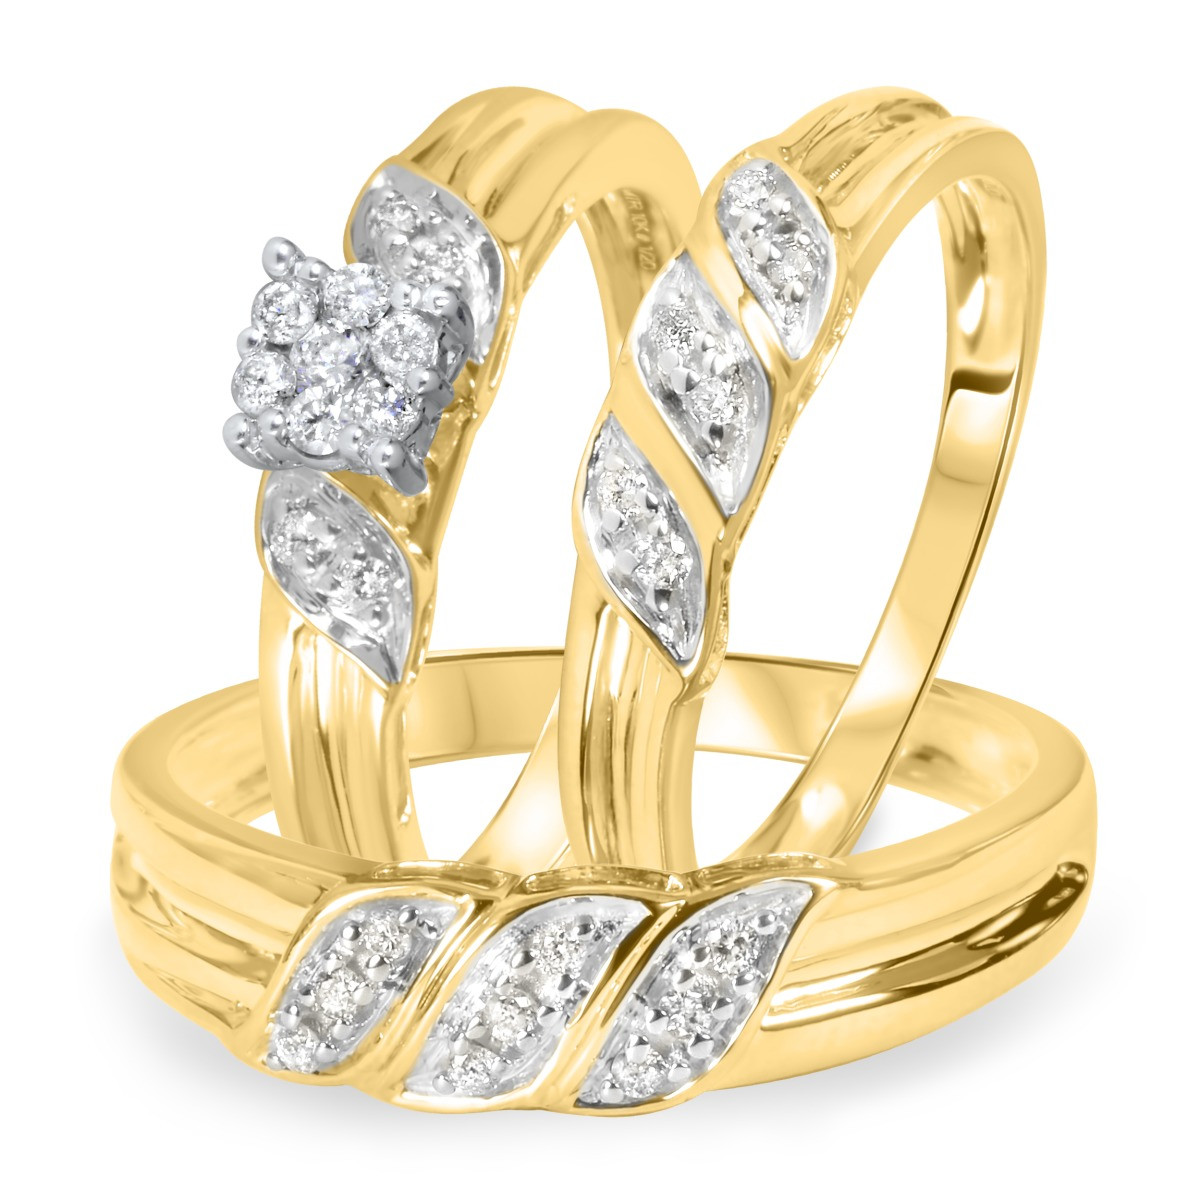 Yellow Gold Wedding Ring Sets
 1 4 Carat Diamond Trio Wedding Ring Set 14K Yellow Gold